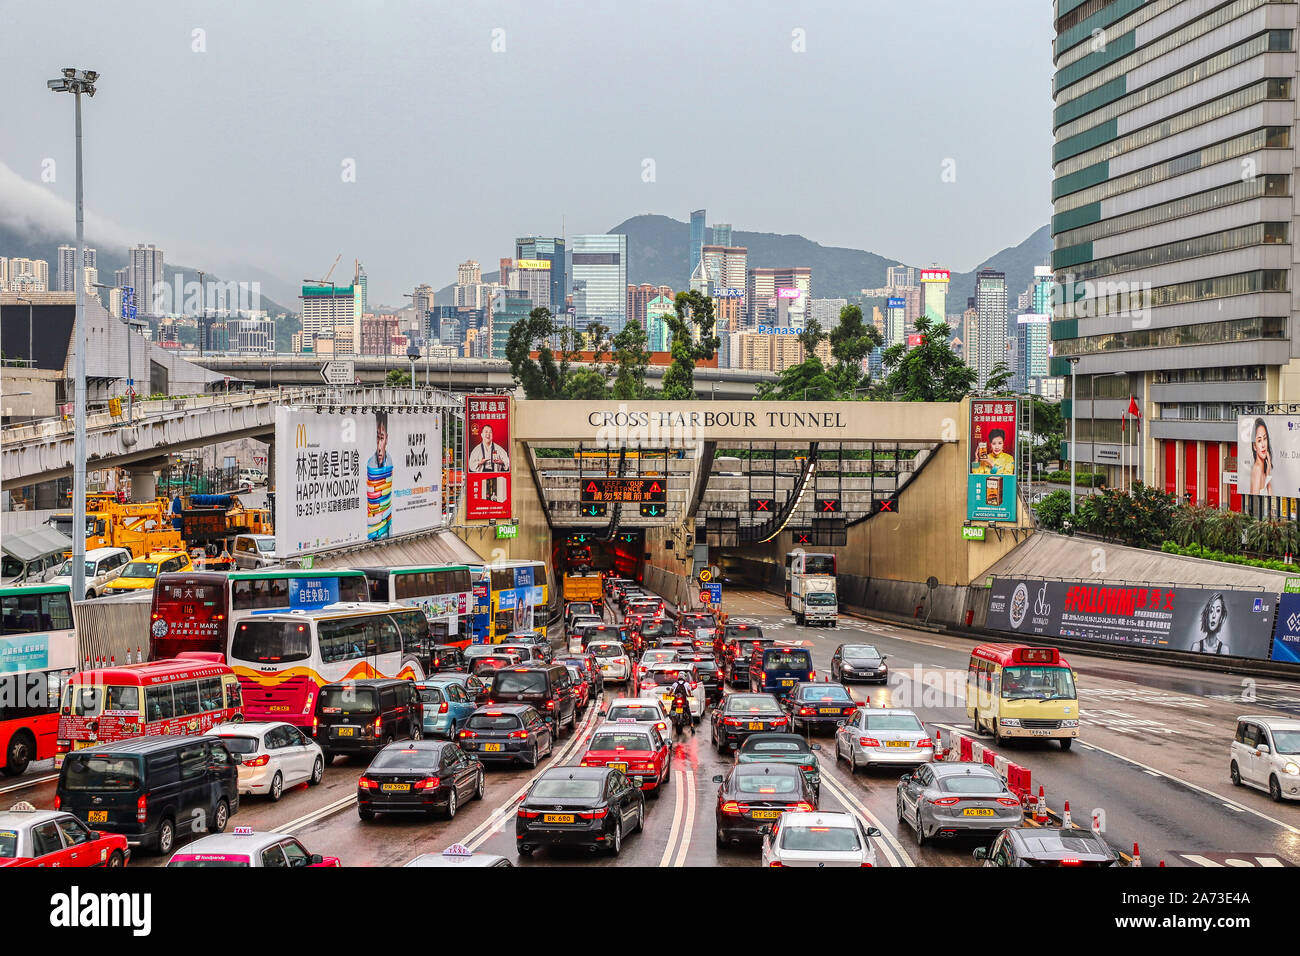 Cross Harbour Tunnel, Traffic Jam, Hong Kong Stock Photo - Alamy